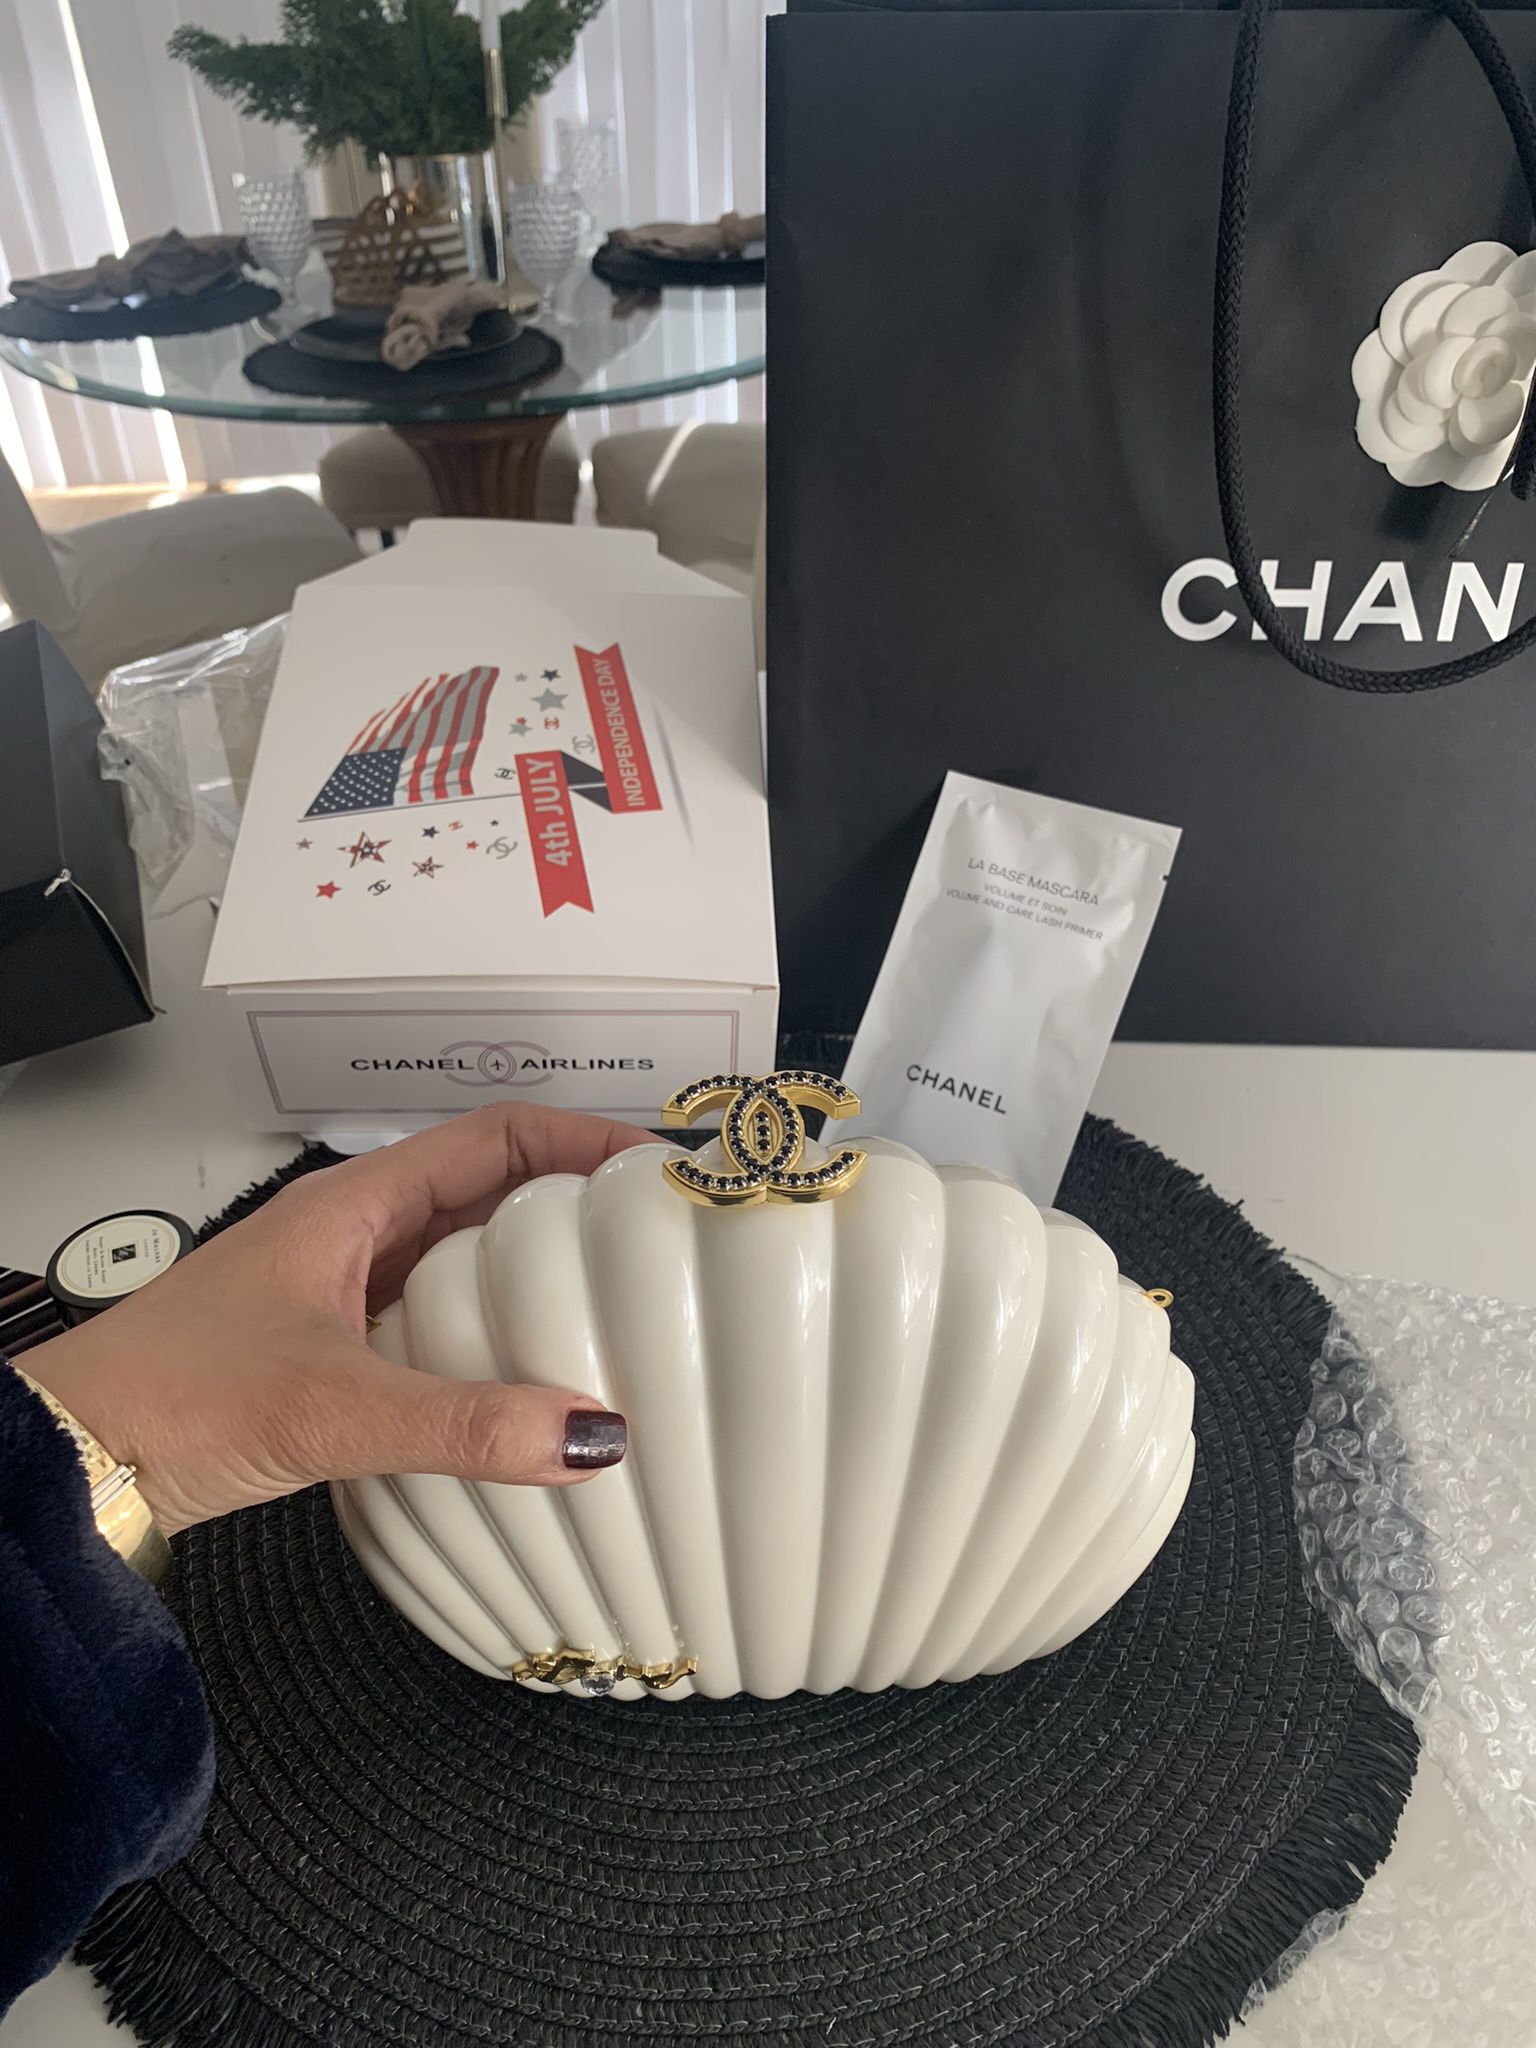 CHANEL Gift Box + Gift Bag SET Authentic Black & White NEW 9 x 5.5 x 3